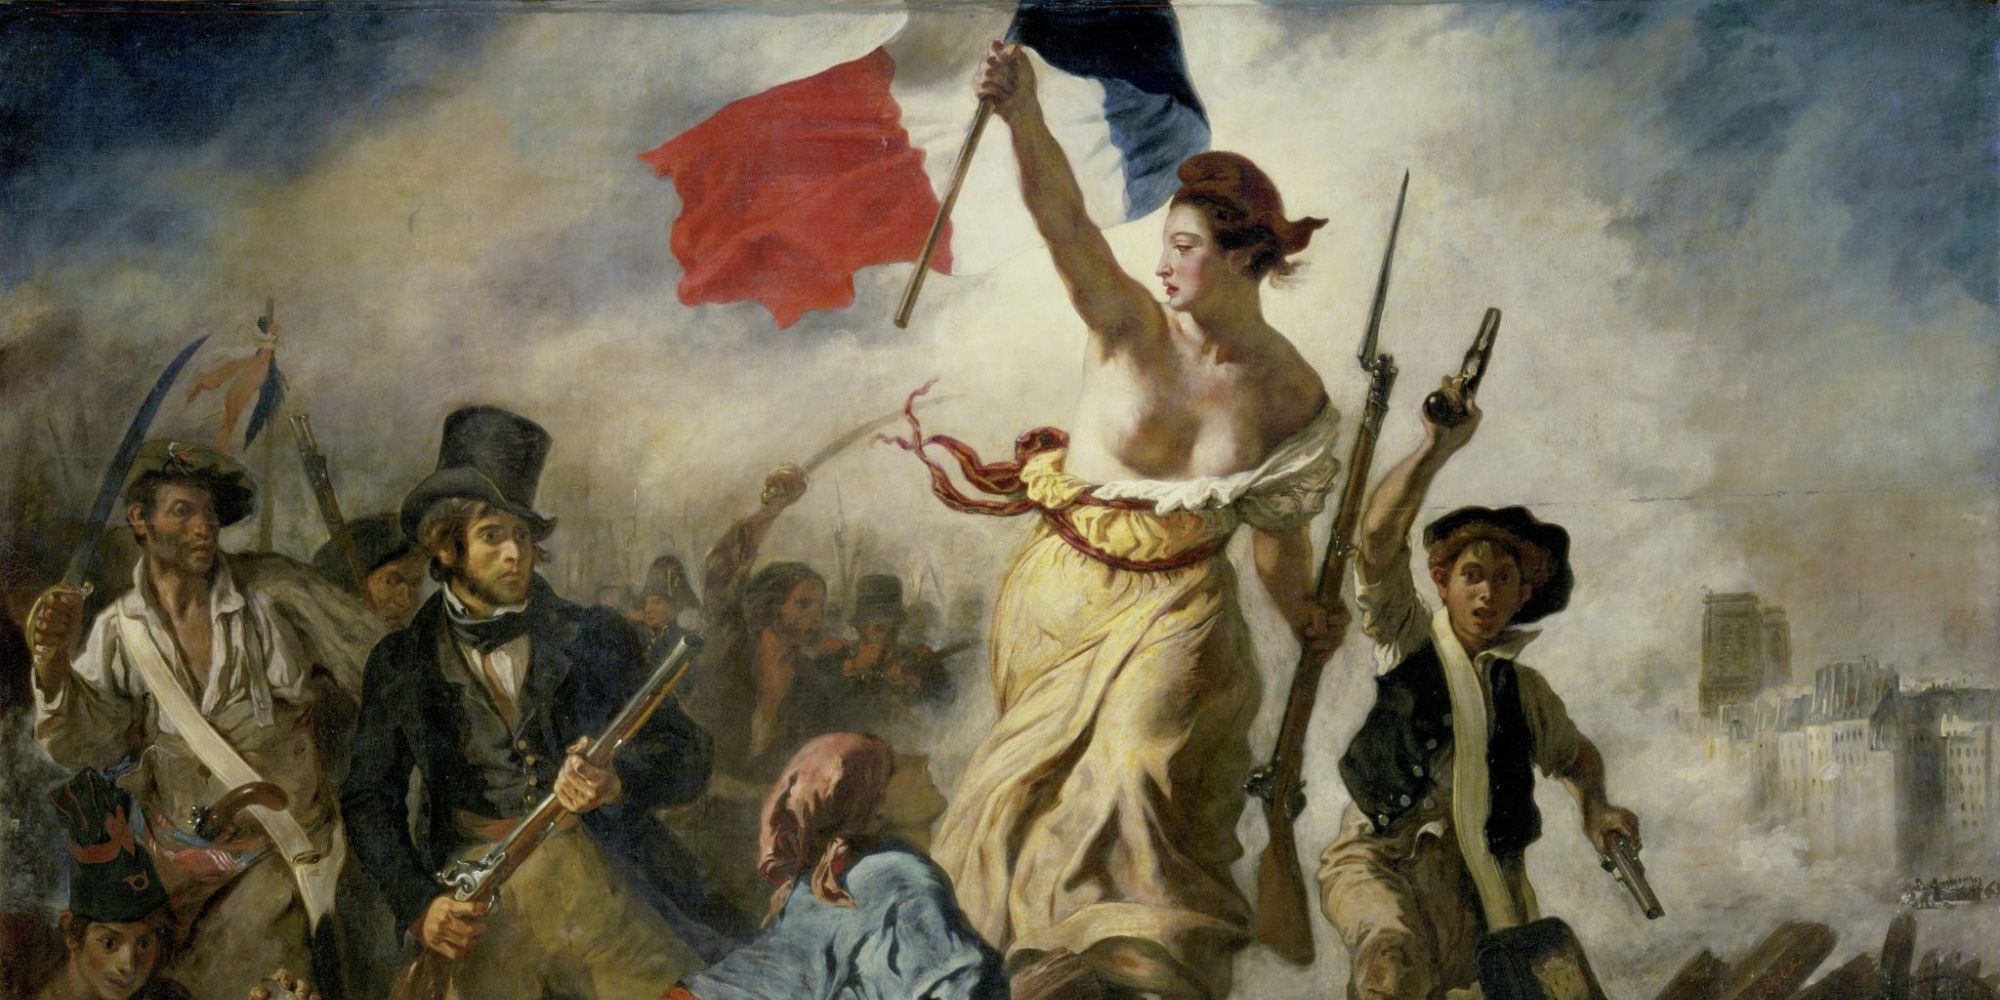 Eugéne Delacroix's painting Liberty Leading the People